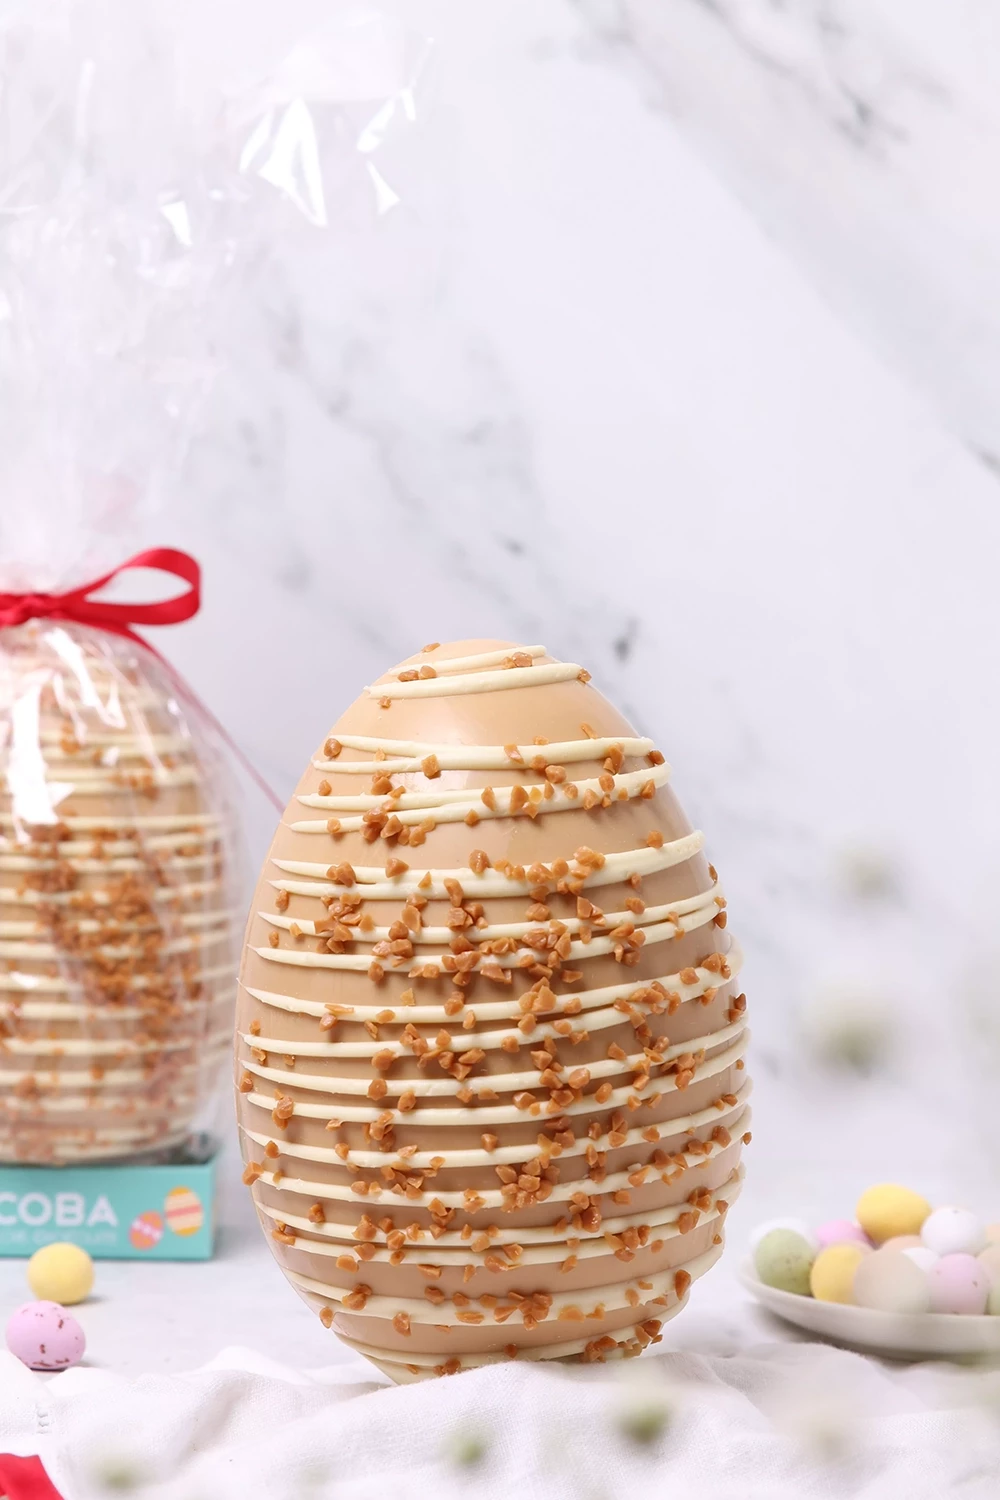 Golden Chocolate Easter Egg with Caramel Shards